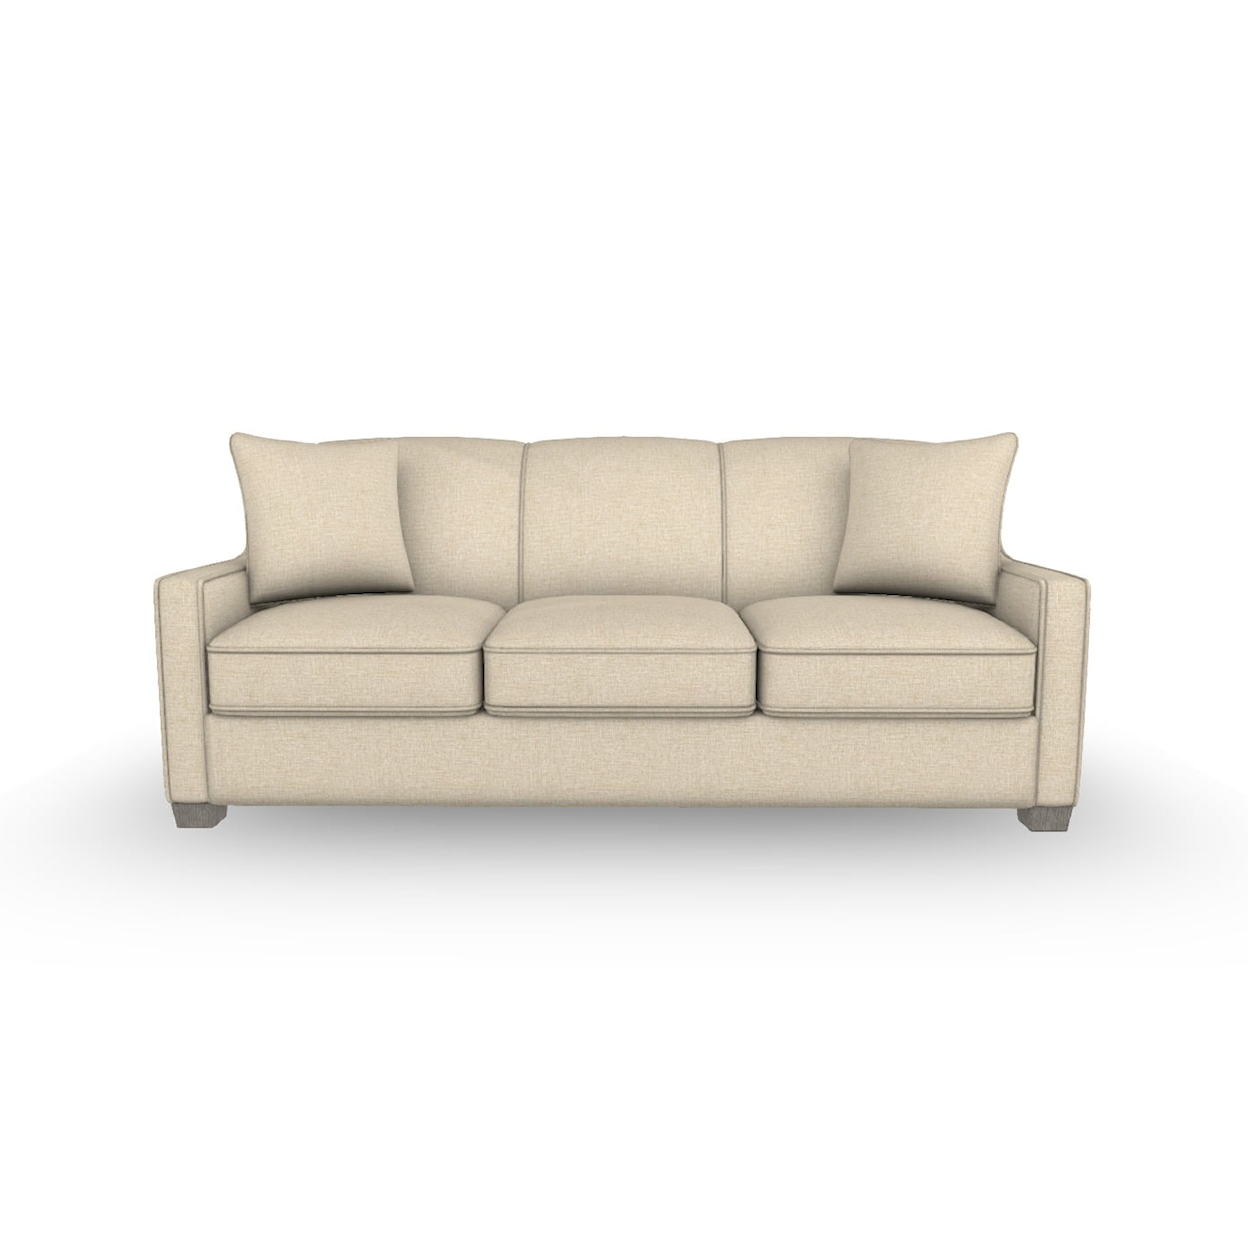 Best Home Furnishings Marinette Full Stationary Sleeper Sofa